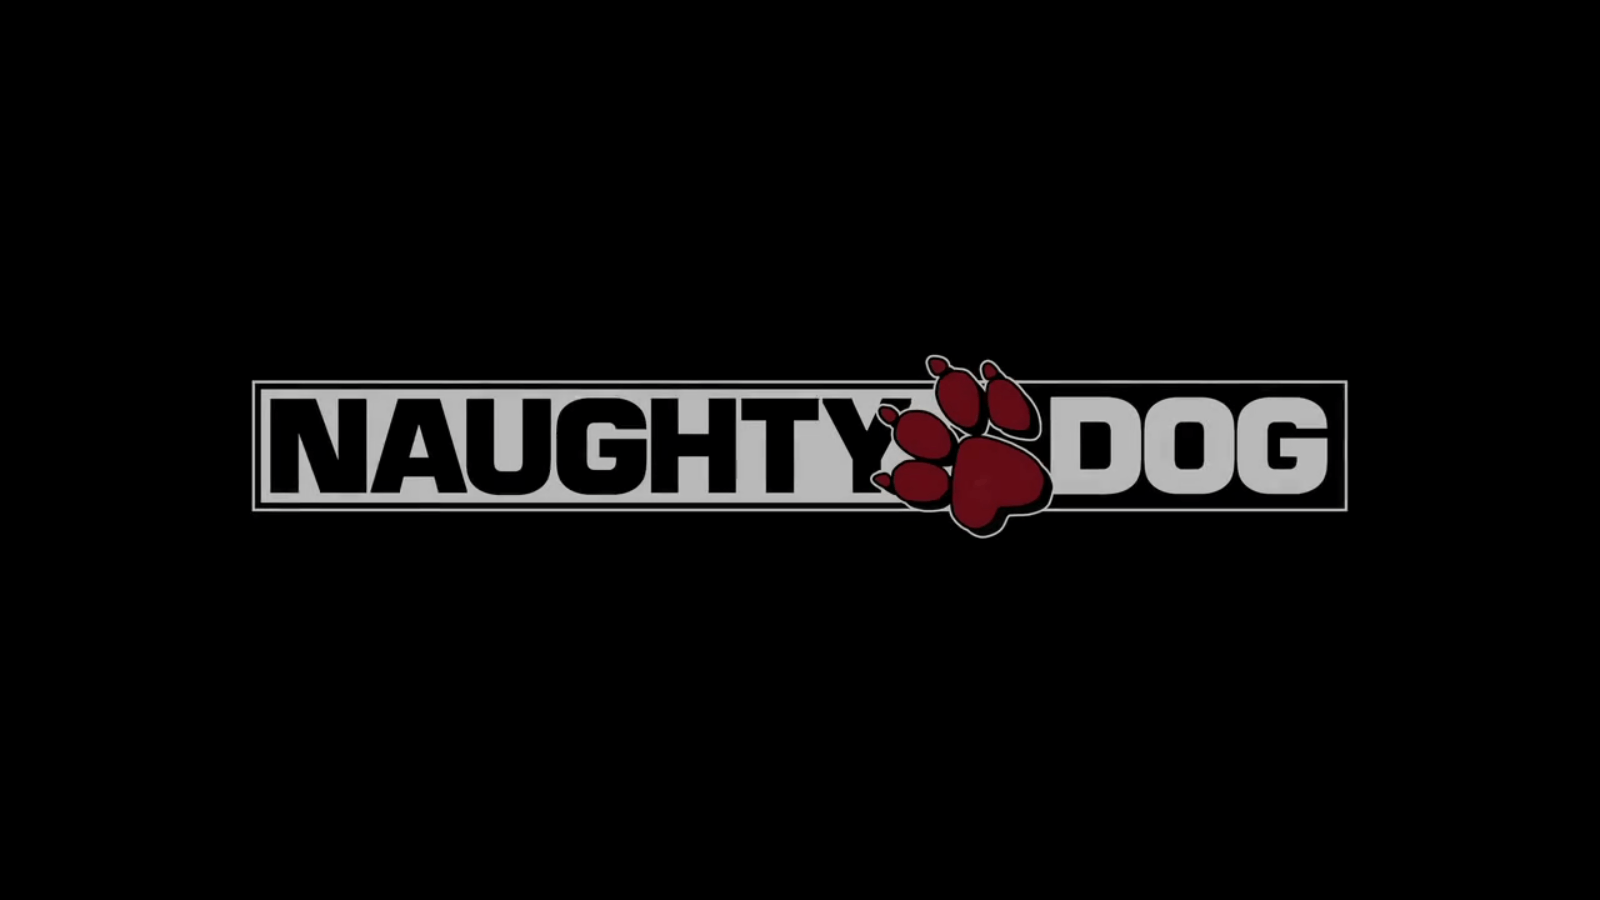 My dream job with Naughty Dog